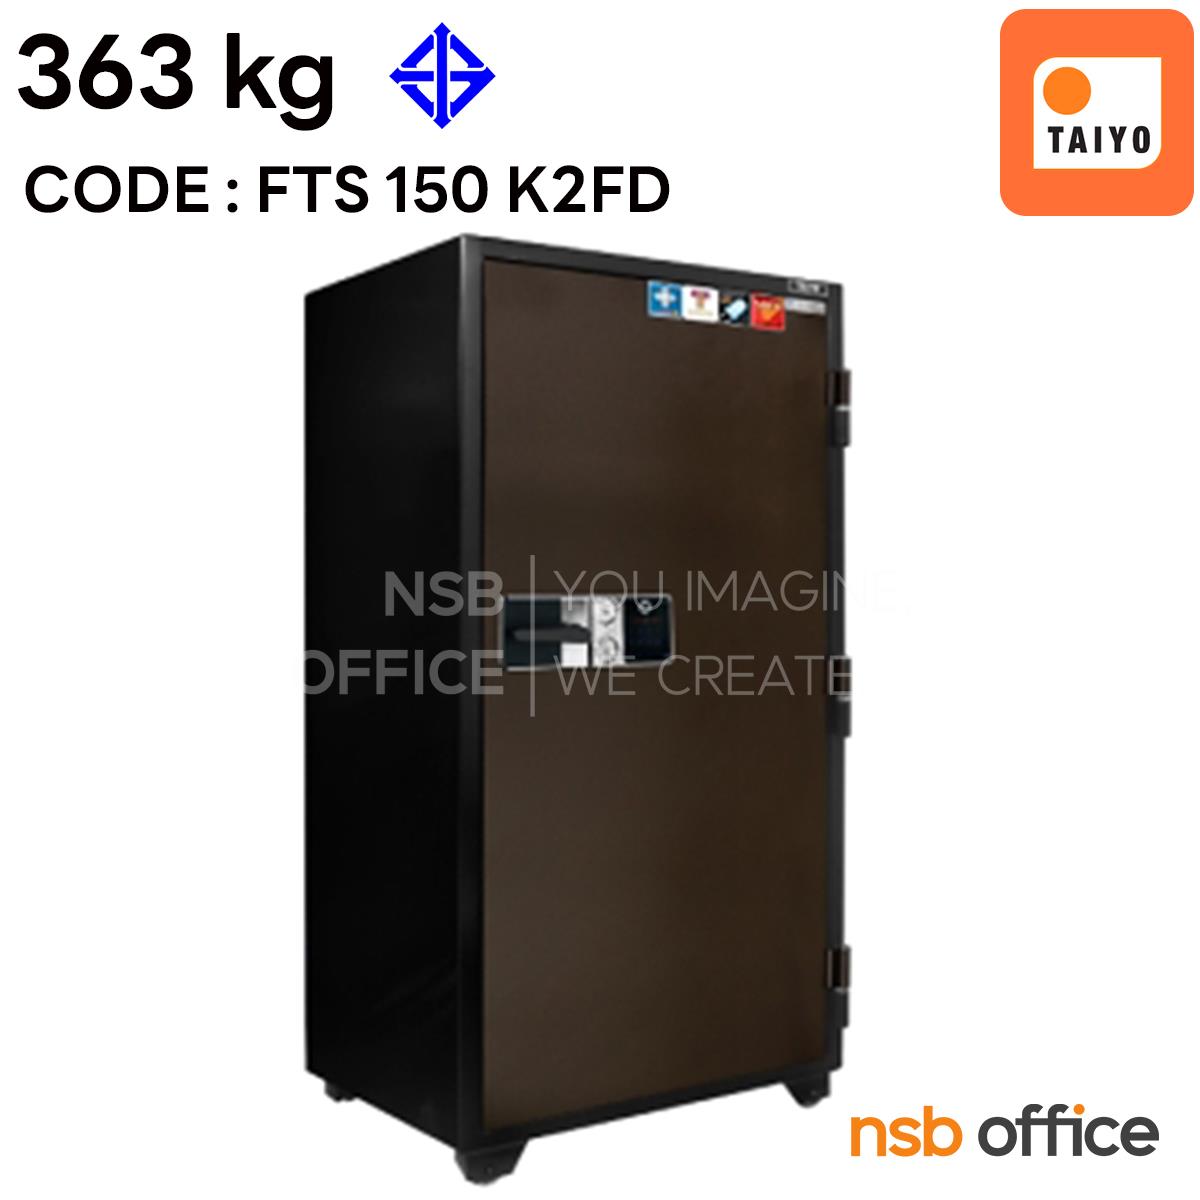 F01A084:ตู้เซฟ Taiyo 363 กก. 2 กุญแจ 1 รหัส (FTS 150 K2FD)   